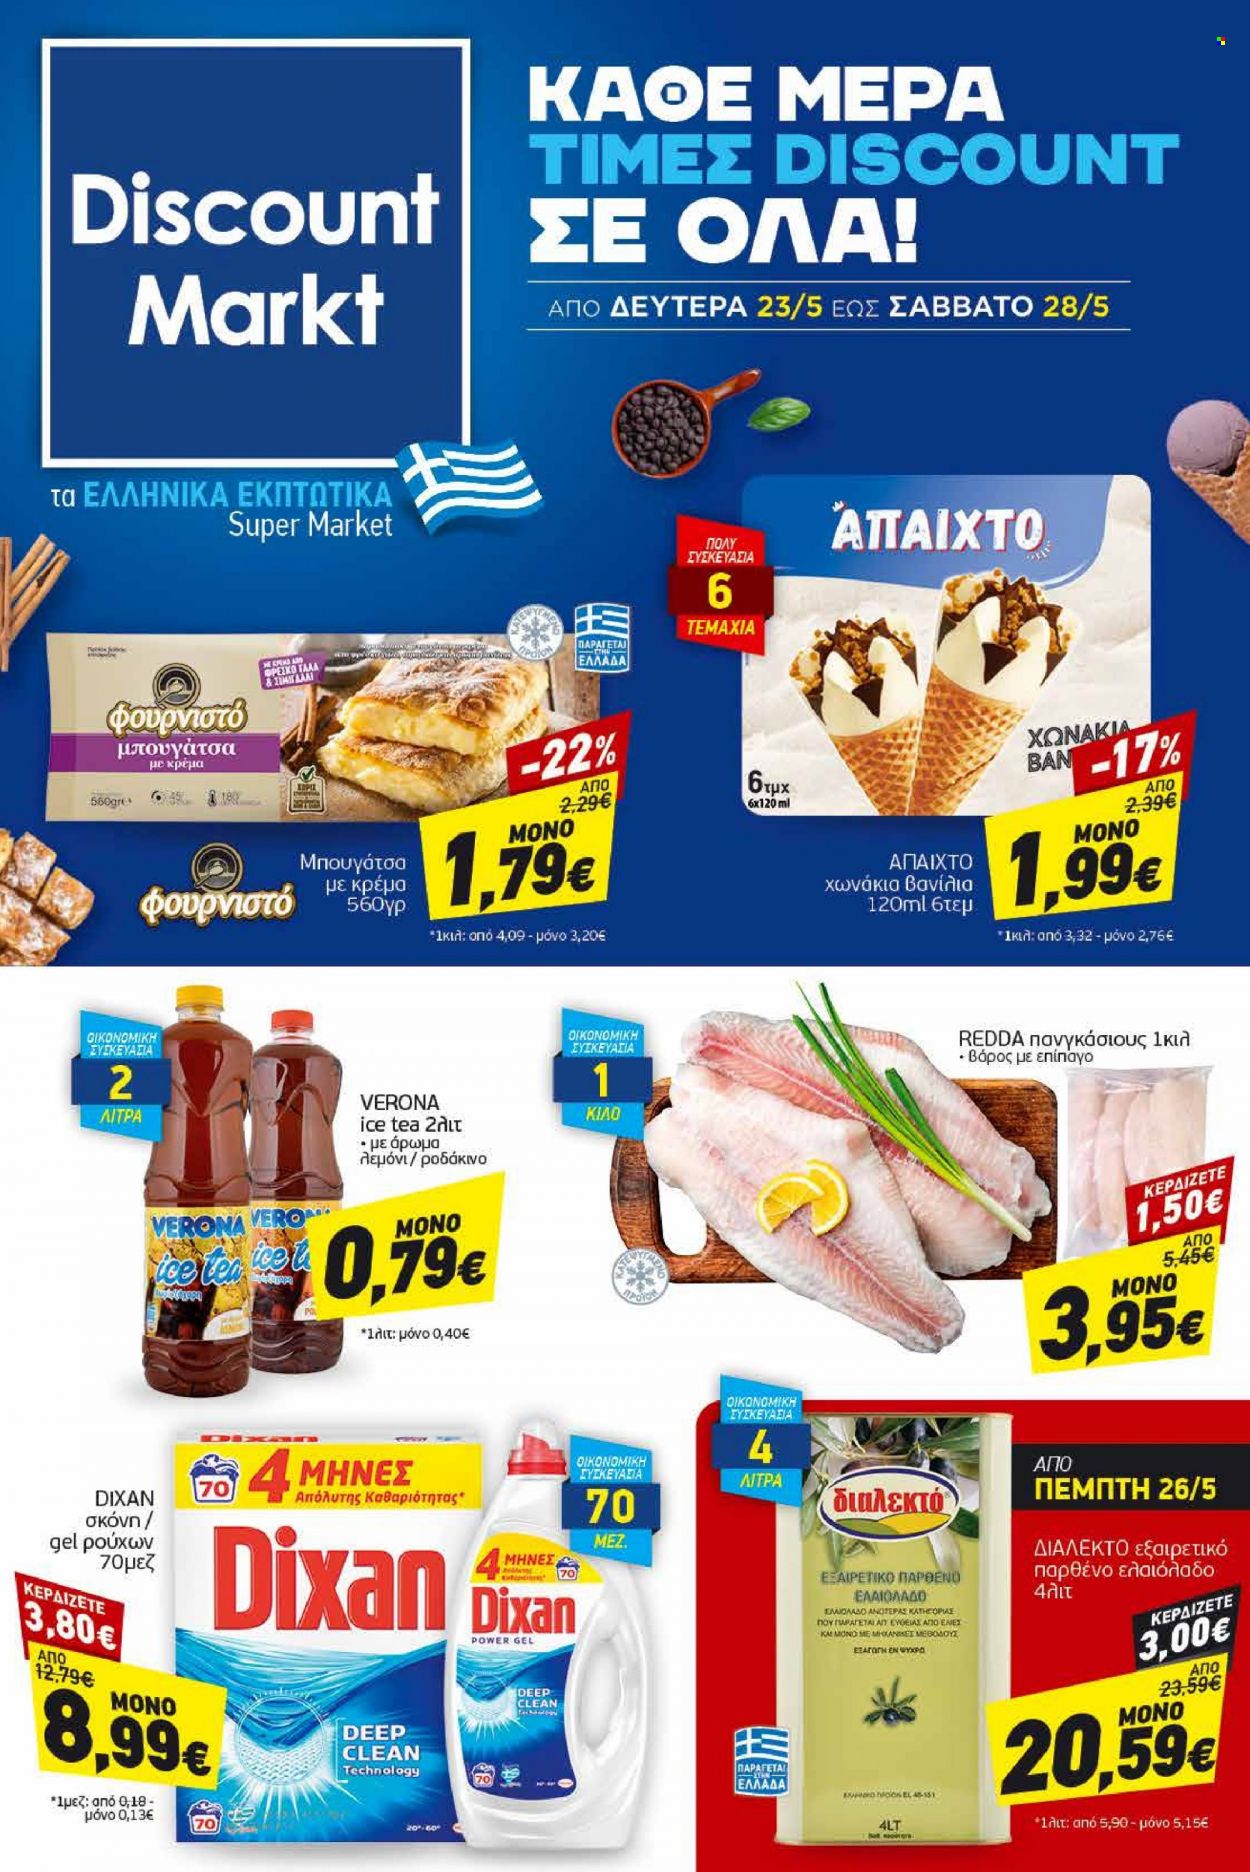 thumbnail - Φυλλάδια Discount Markt - 23.05.2022 - 28.05.2022 - Εκπτωτικά προϊόντα - γάλα, ελαιόλαδο, Dixan. Σελίδα 1.